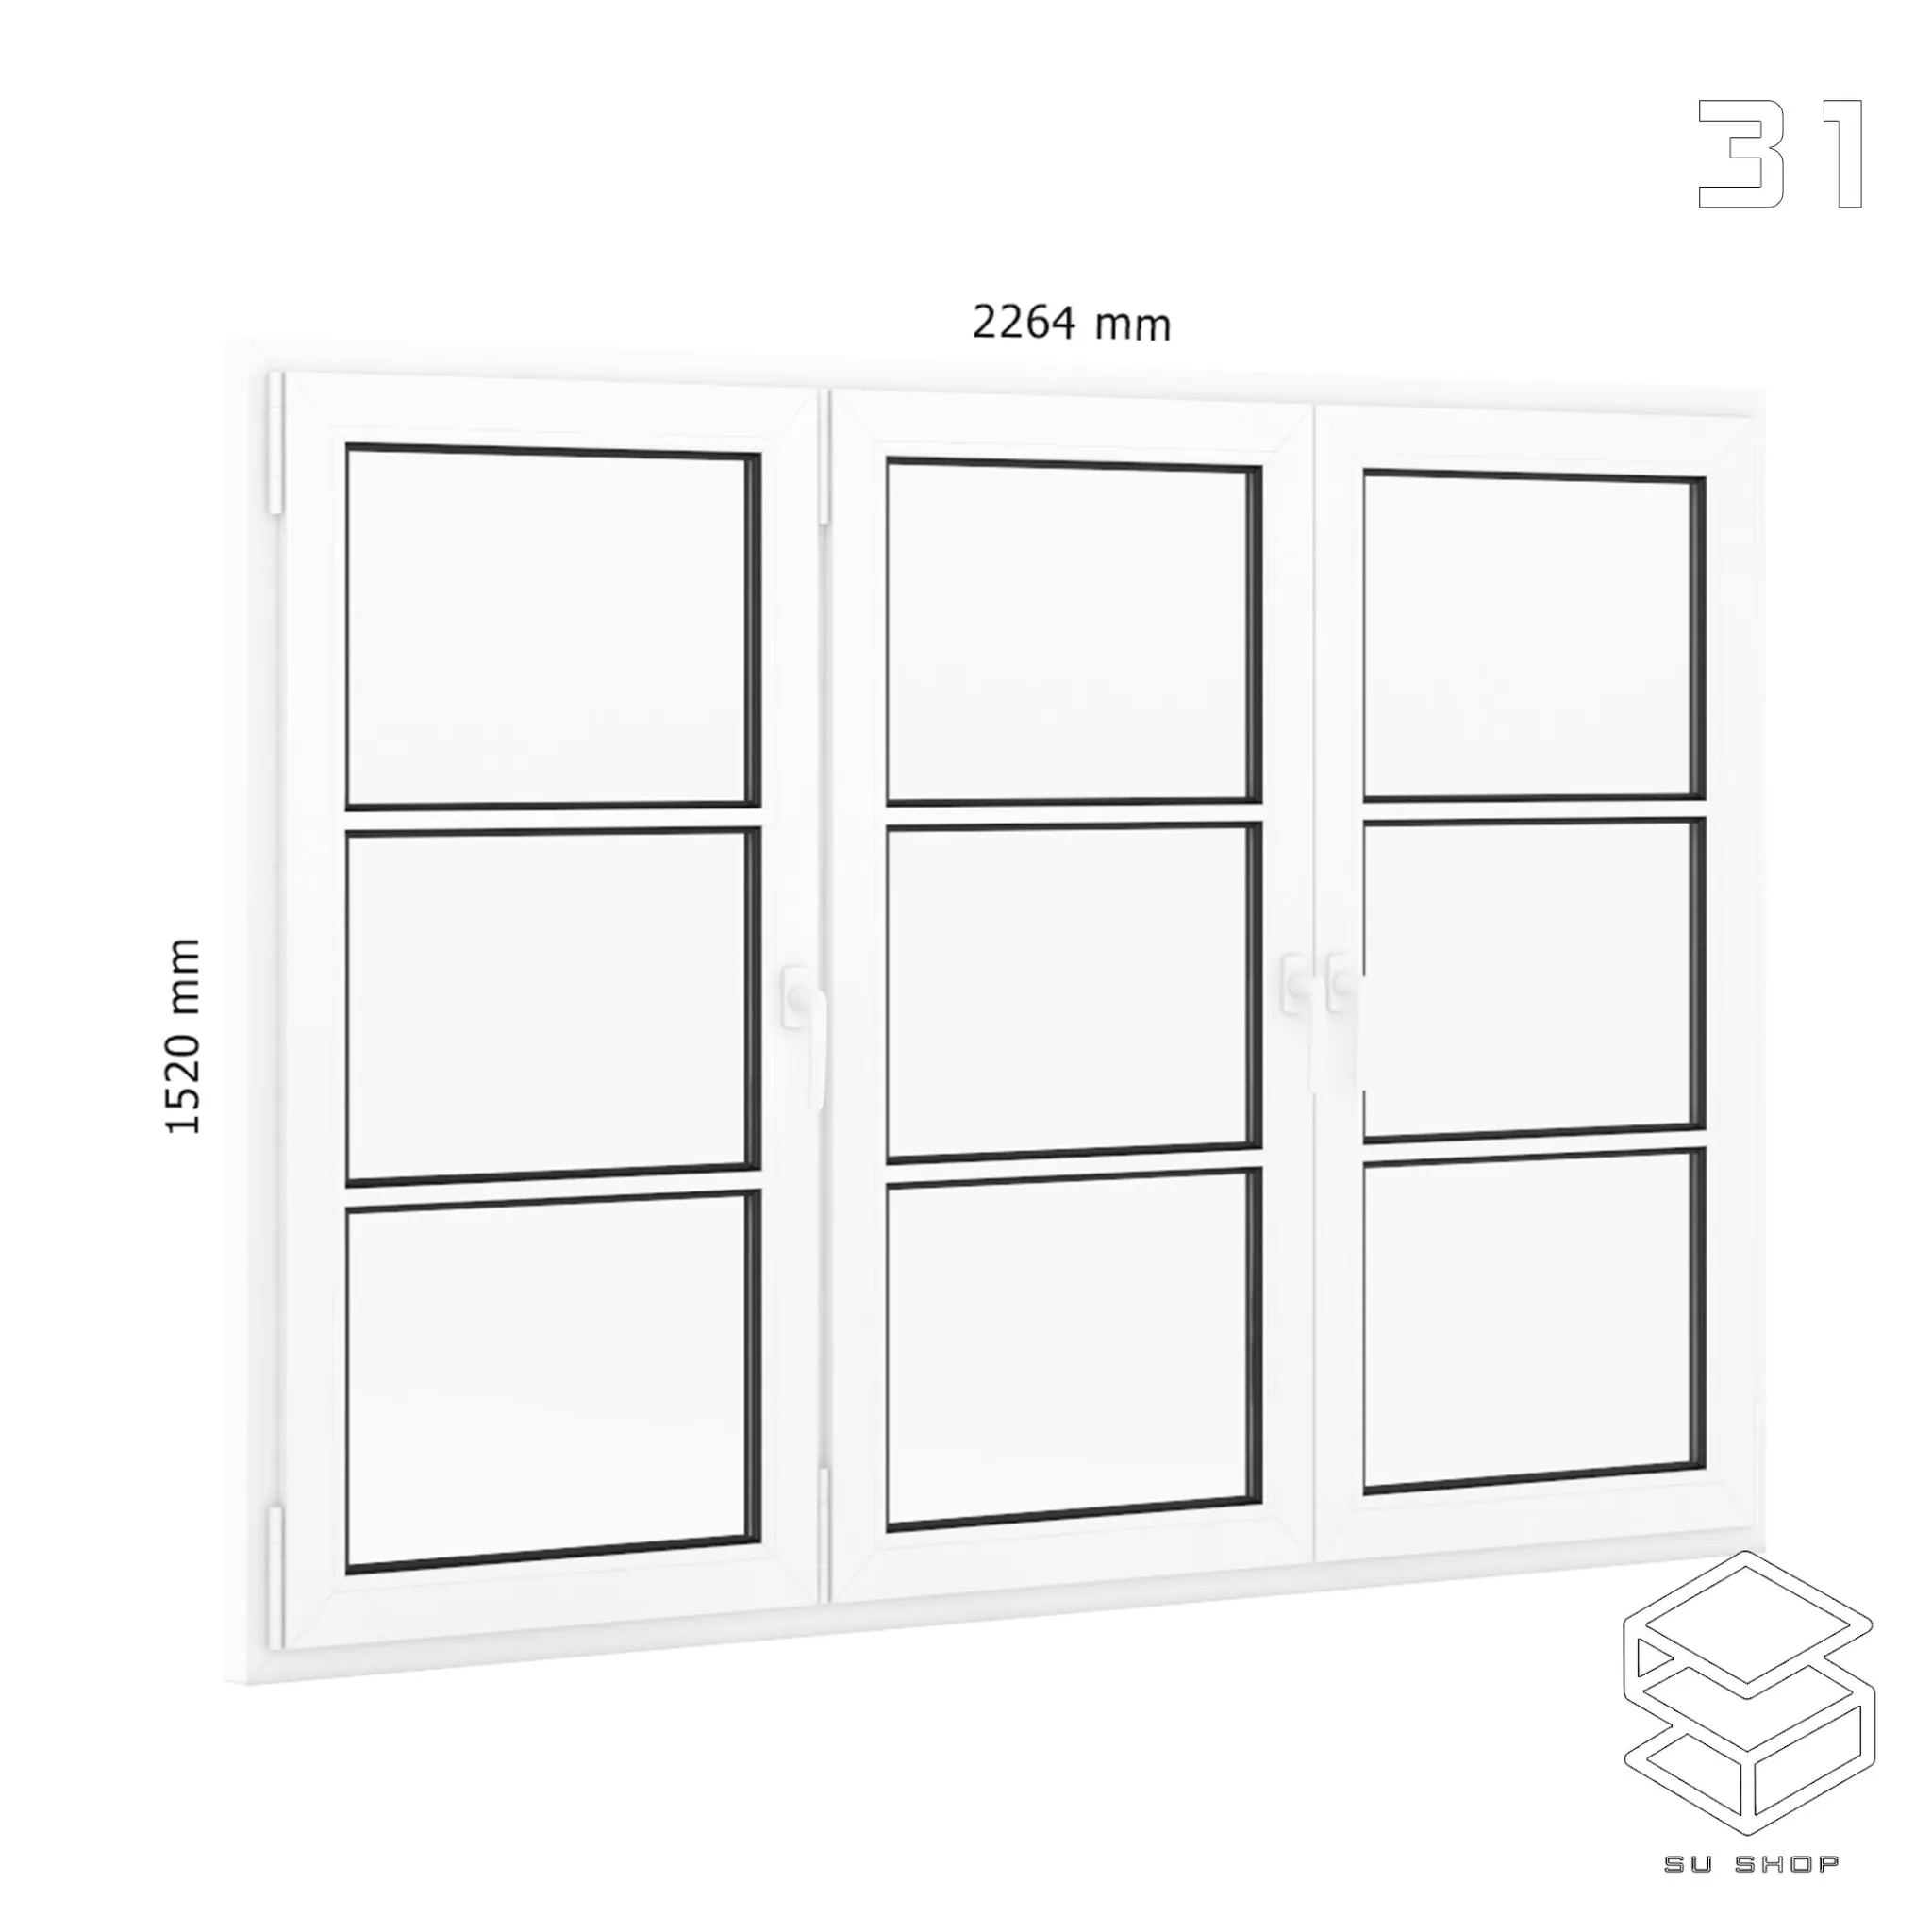 MODERN WINDOWS - SKETCHUP 3D MODEL - VRAY OR ENSCAPE - ID16772